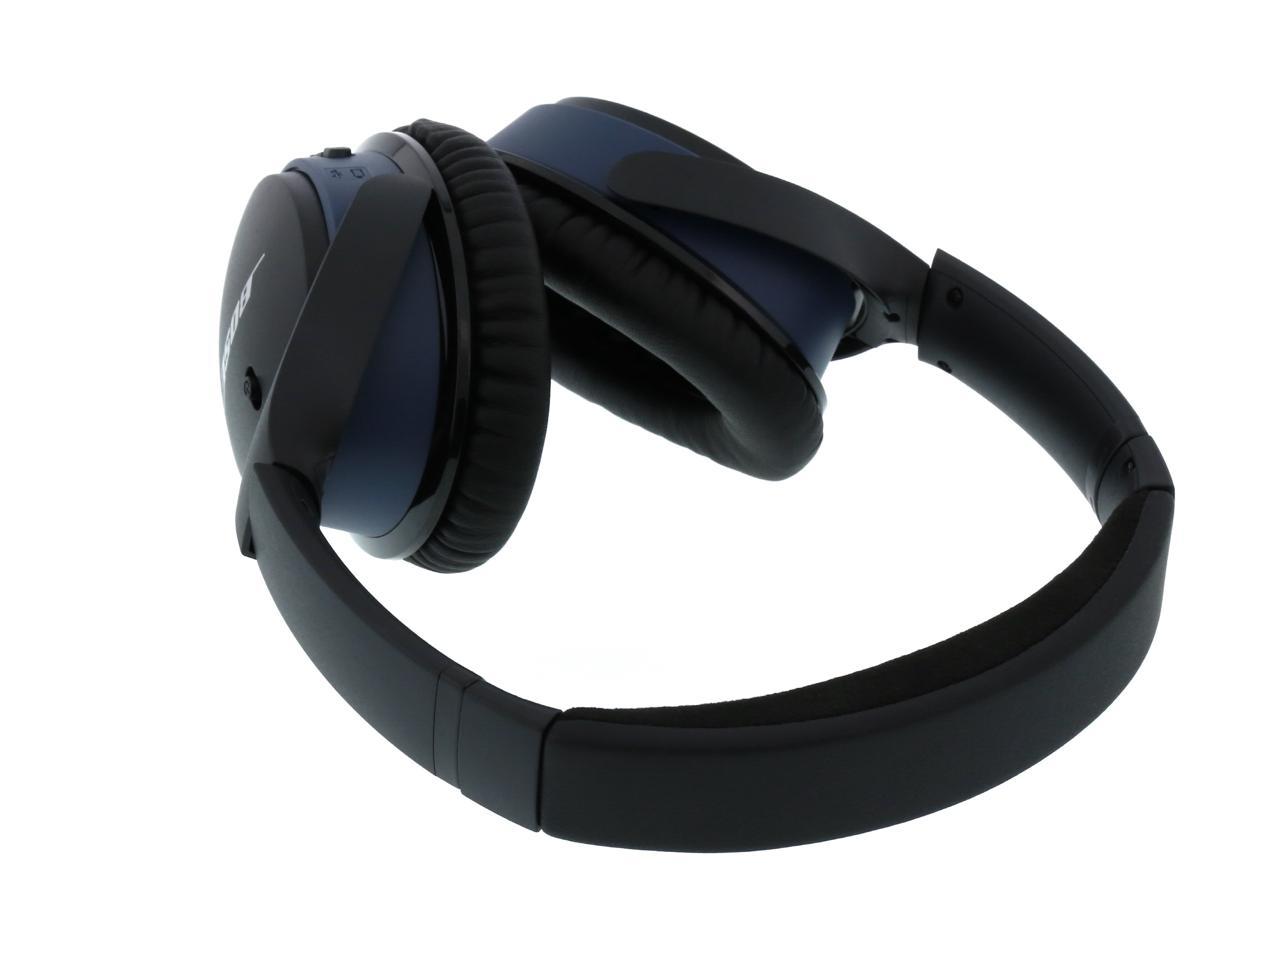 Bose SoundLink Around-Ear Wireless Bluetooth II - Black - Newegg.com